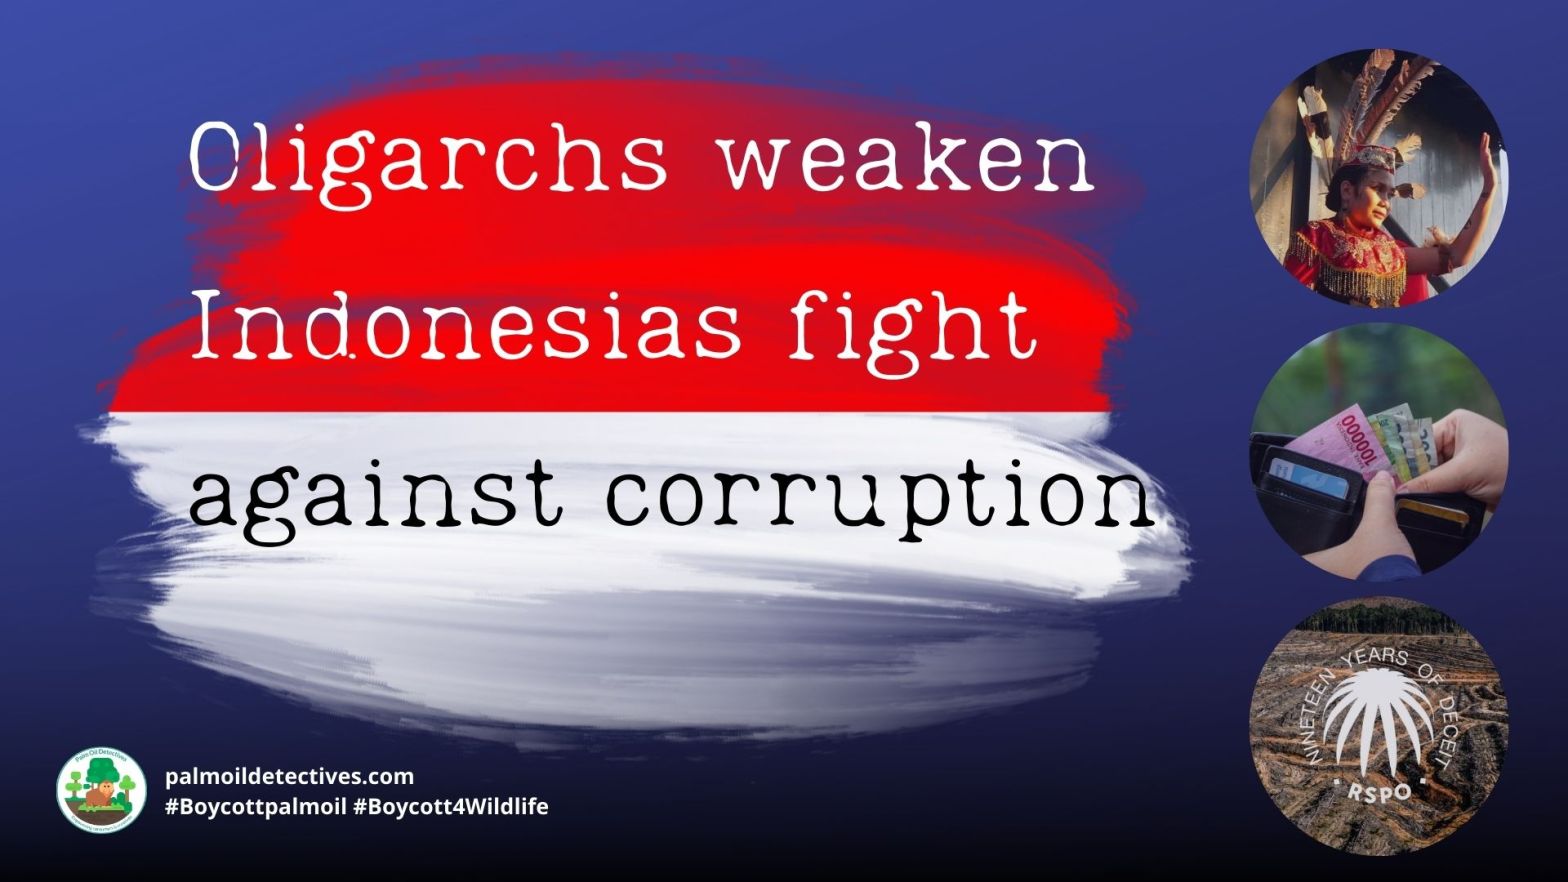 Oligarchs weaken Indonesia's fight against corruption